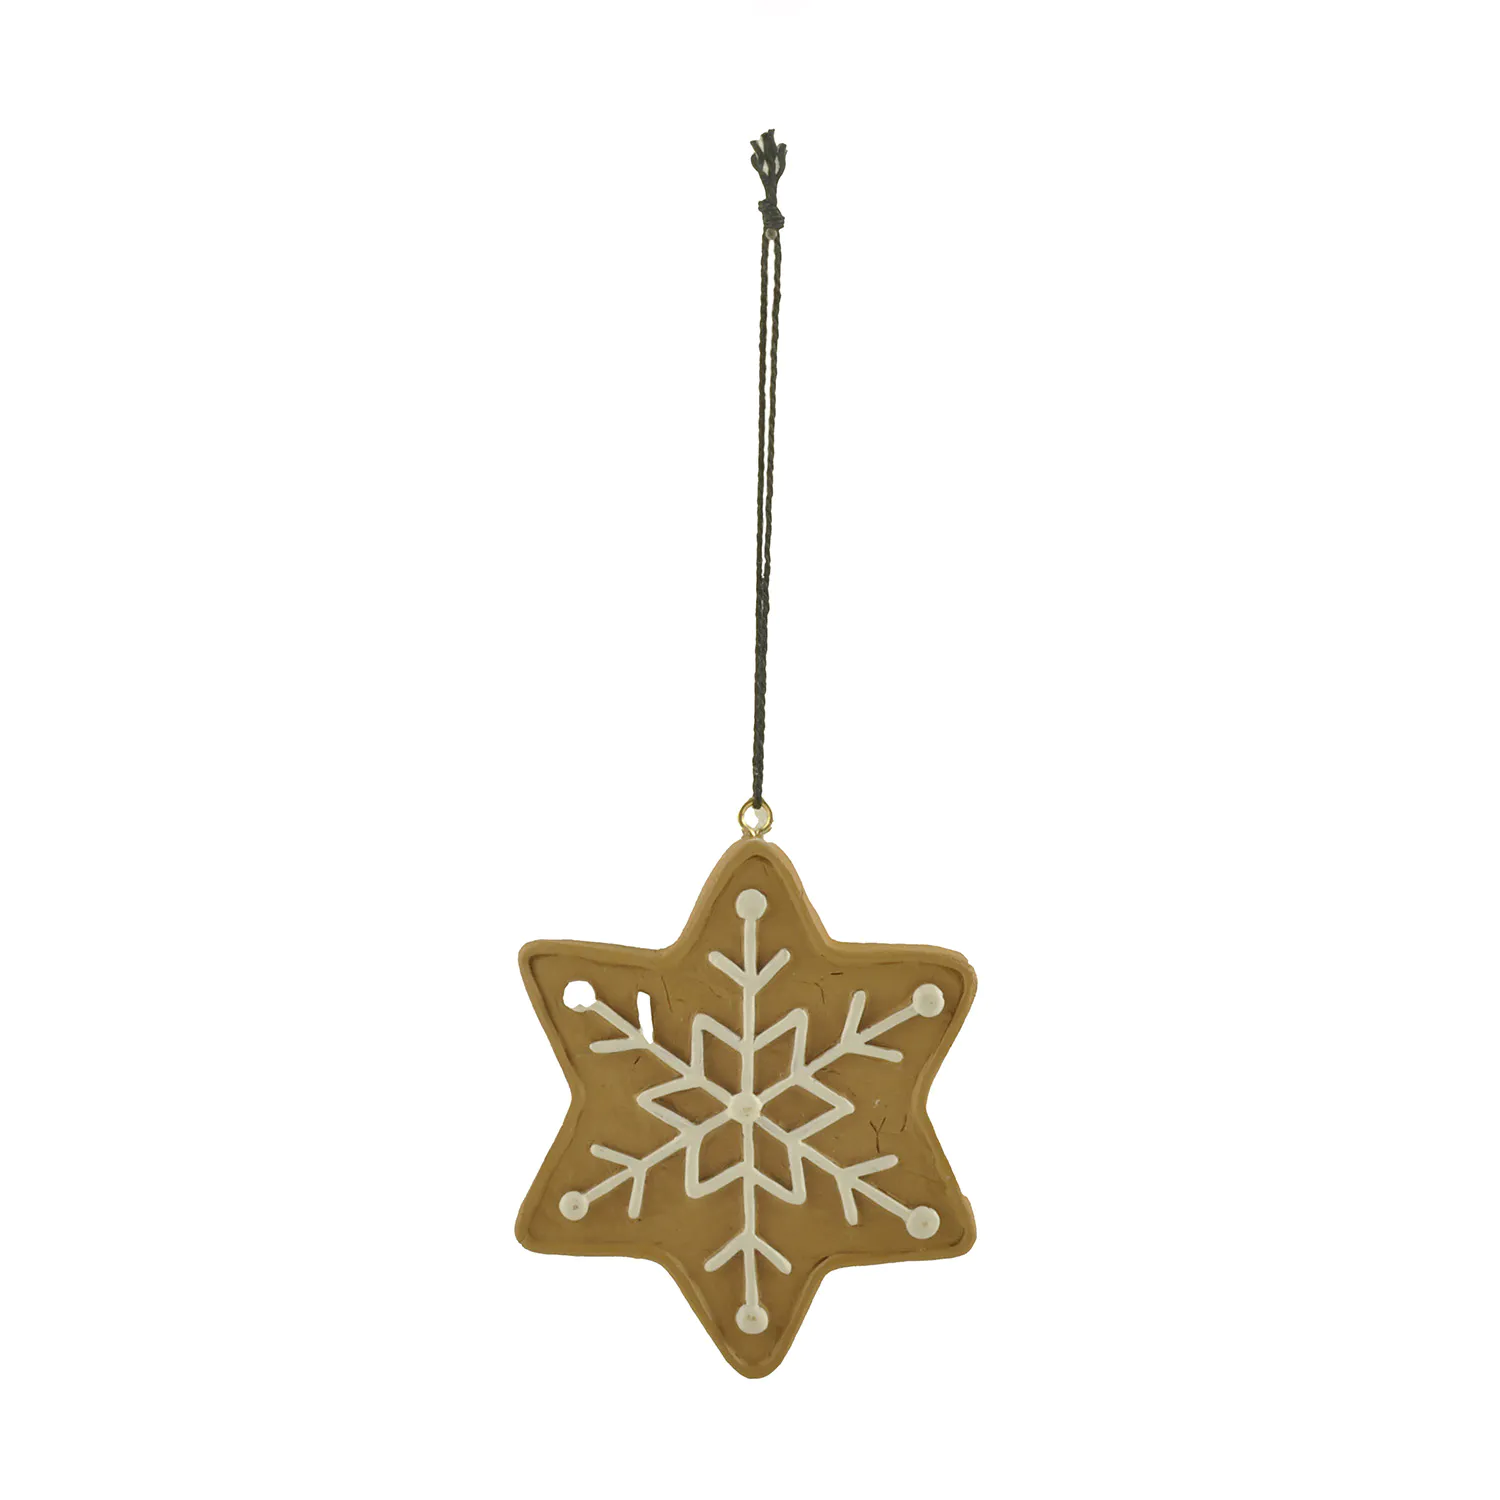 New Design Factory Handmade Christmas Cookie Ornament Christmas Tree Pendant Room Decoration Gift 3.15'' Tall 228-52064